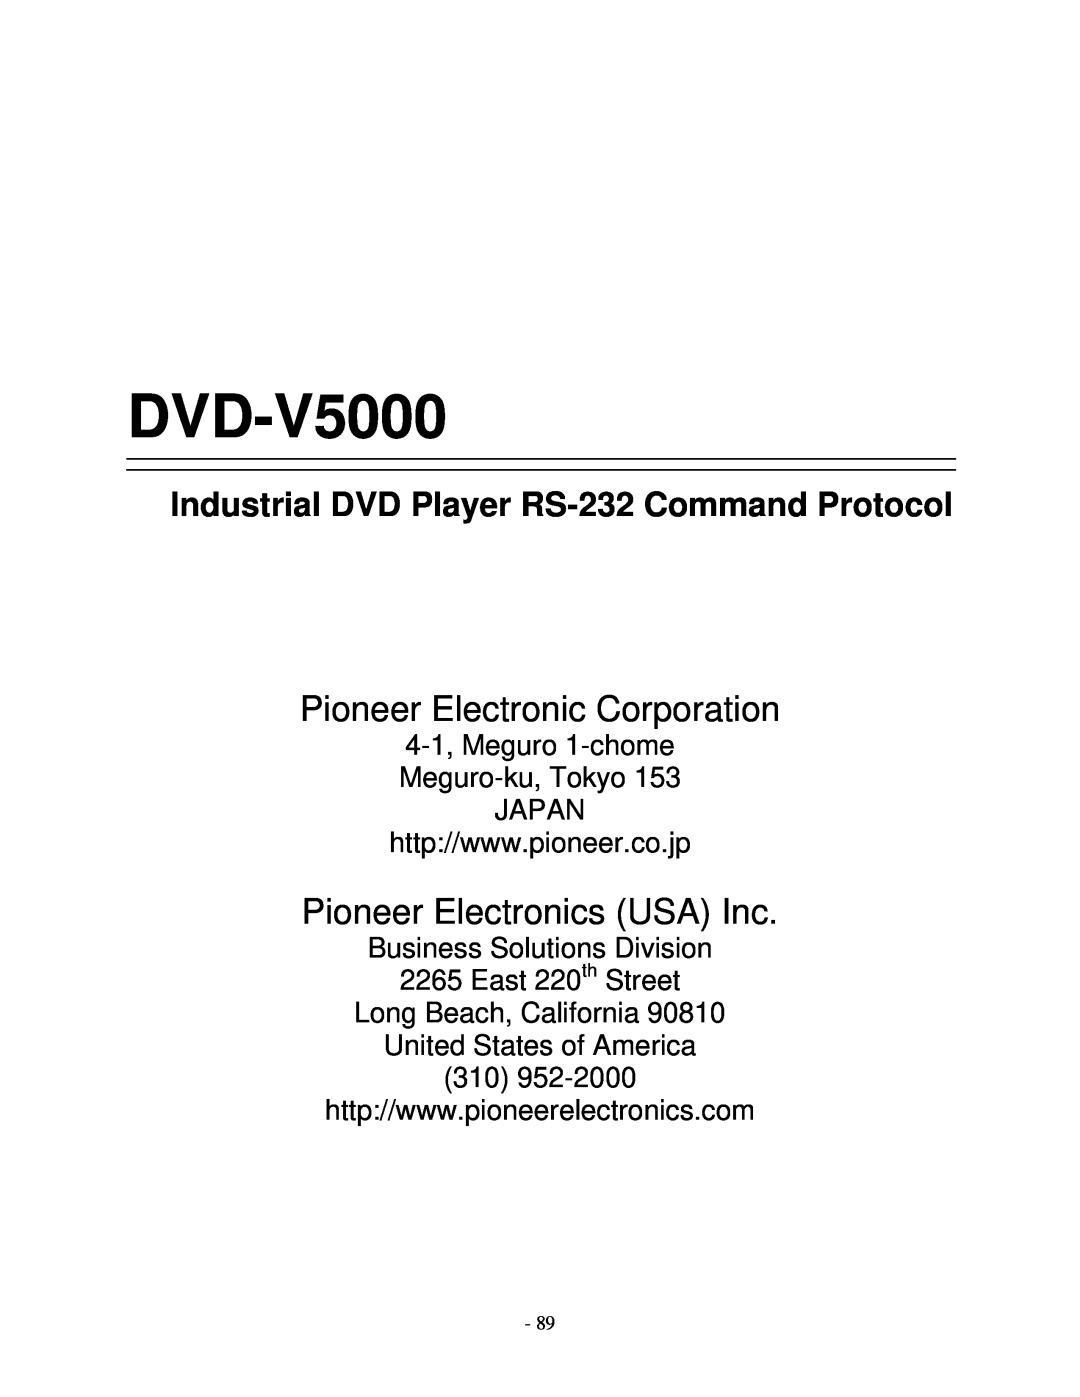 Pioneer RS-232C manual DVD-V5000, Pioneer Electronic Corporation, Pioneer Electronics USA Inc 